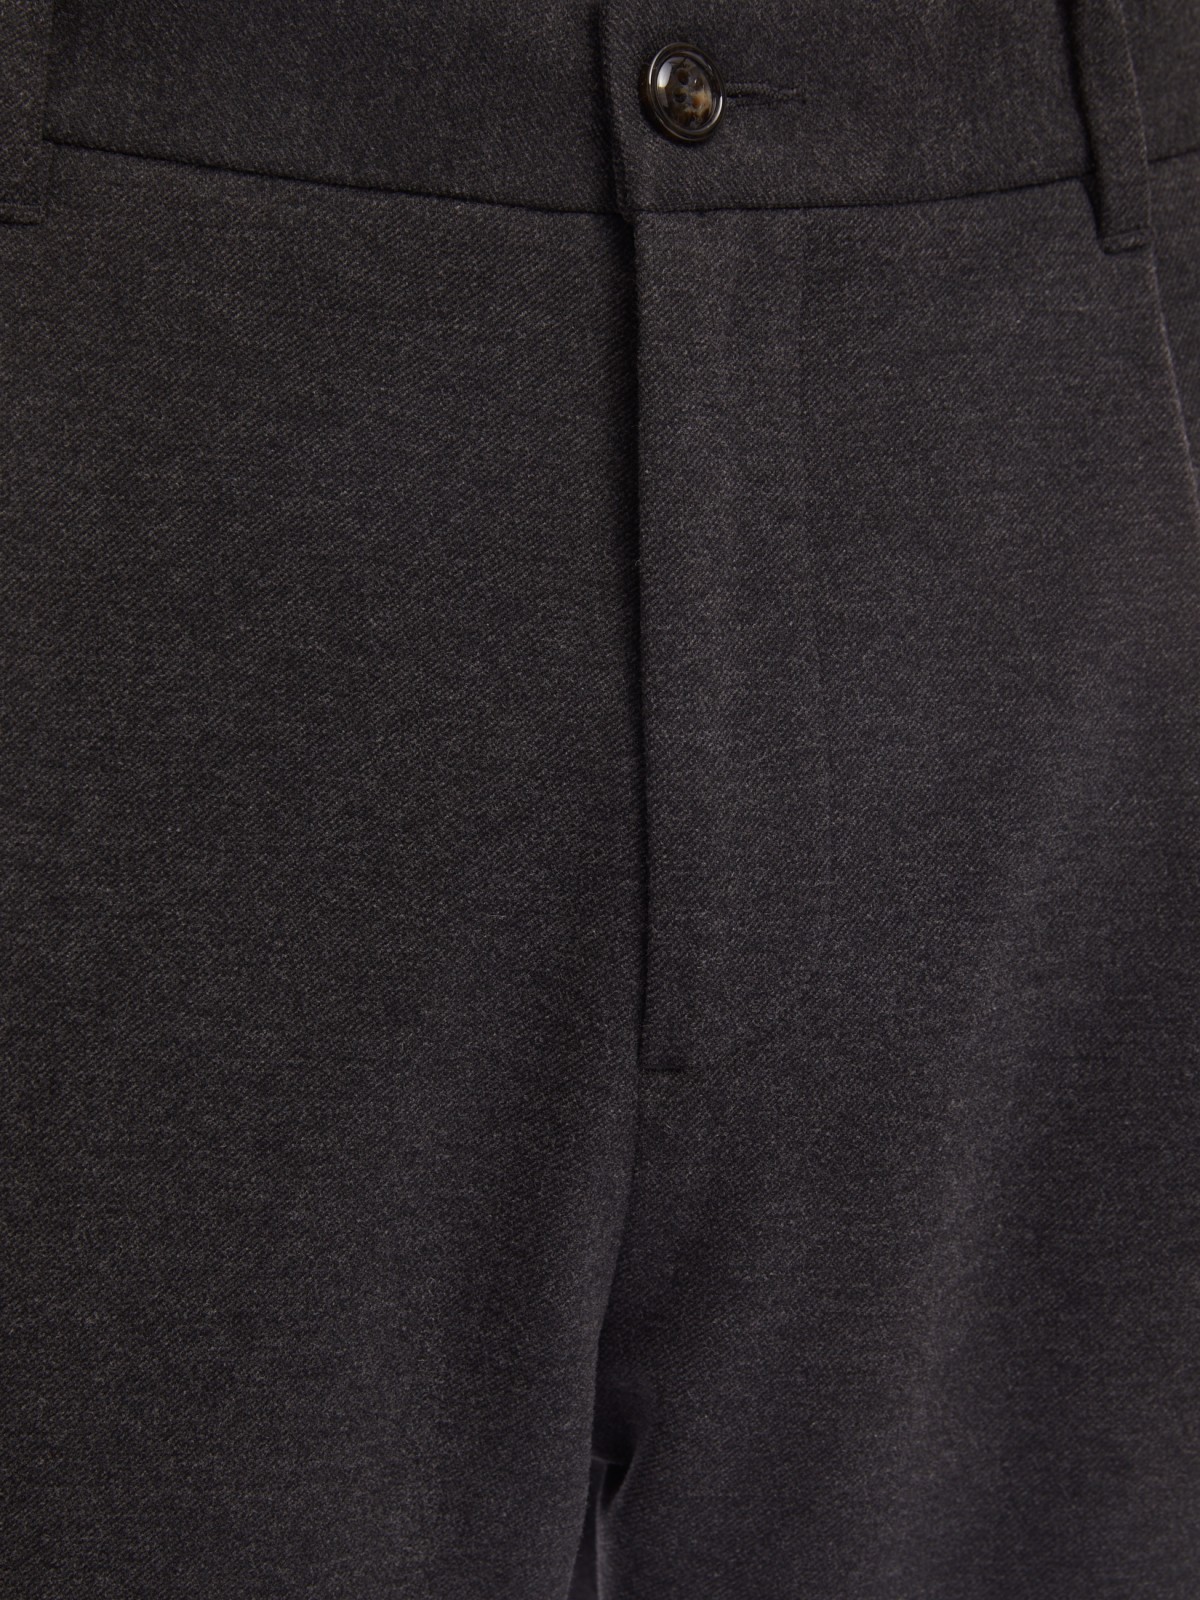 Офисные брюки силуэта Tapered zolla 014117366013, цвет темно-серый, размер 30 - фото 5